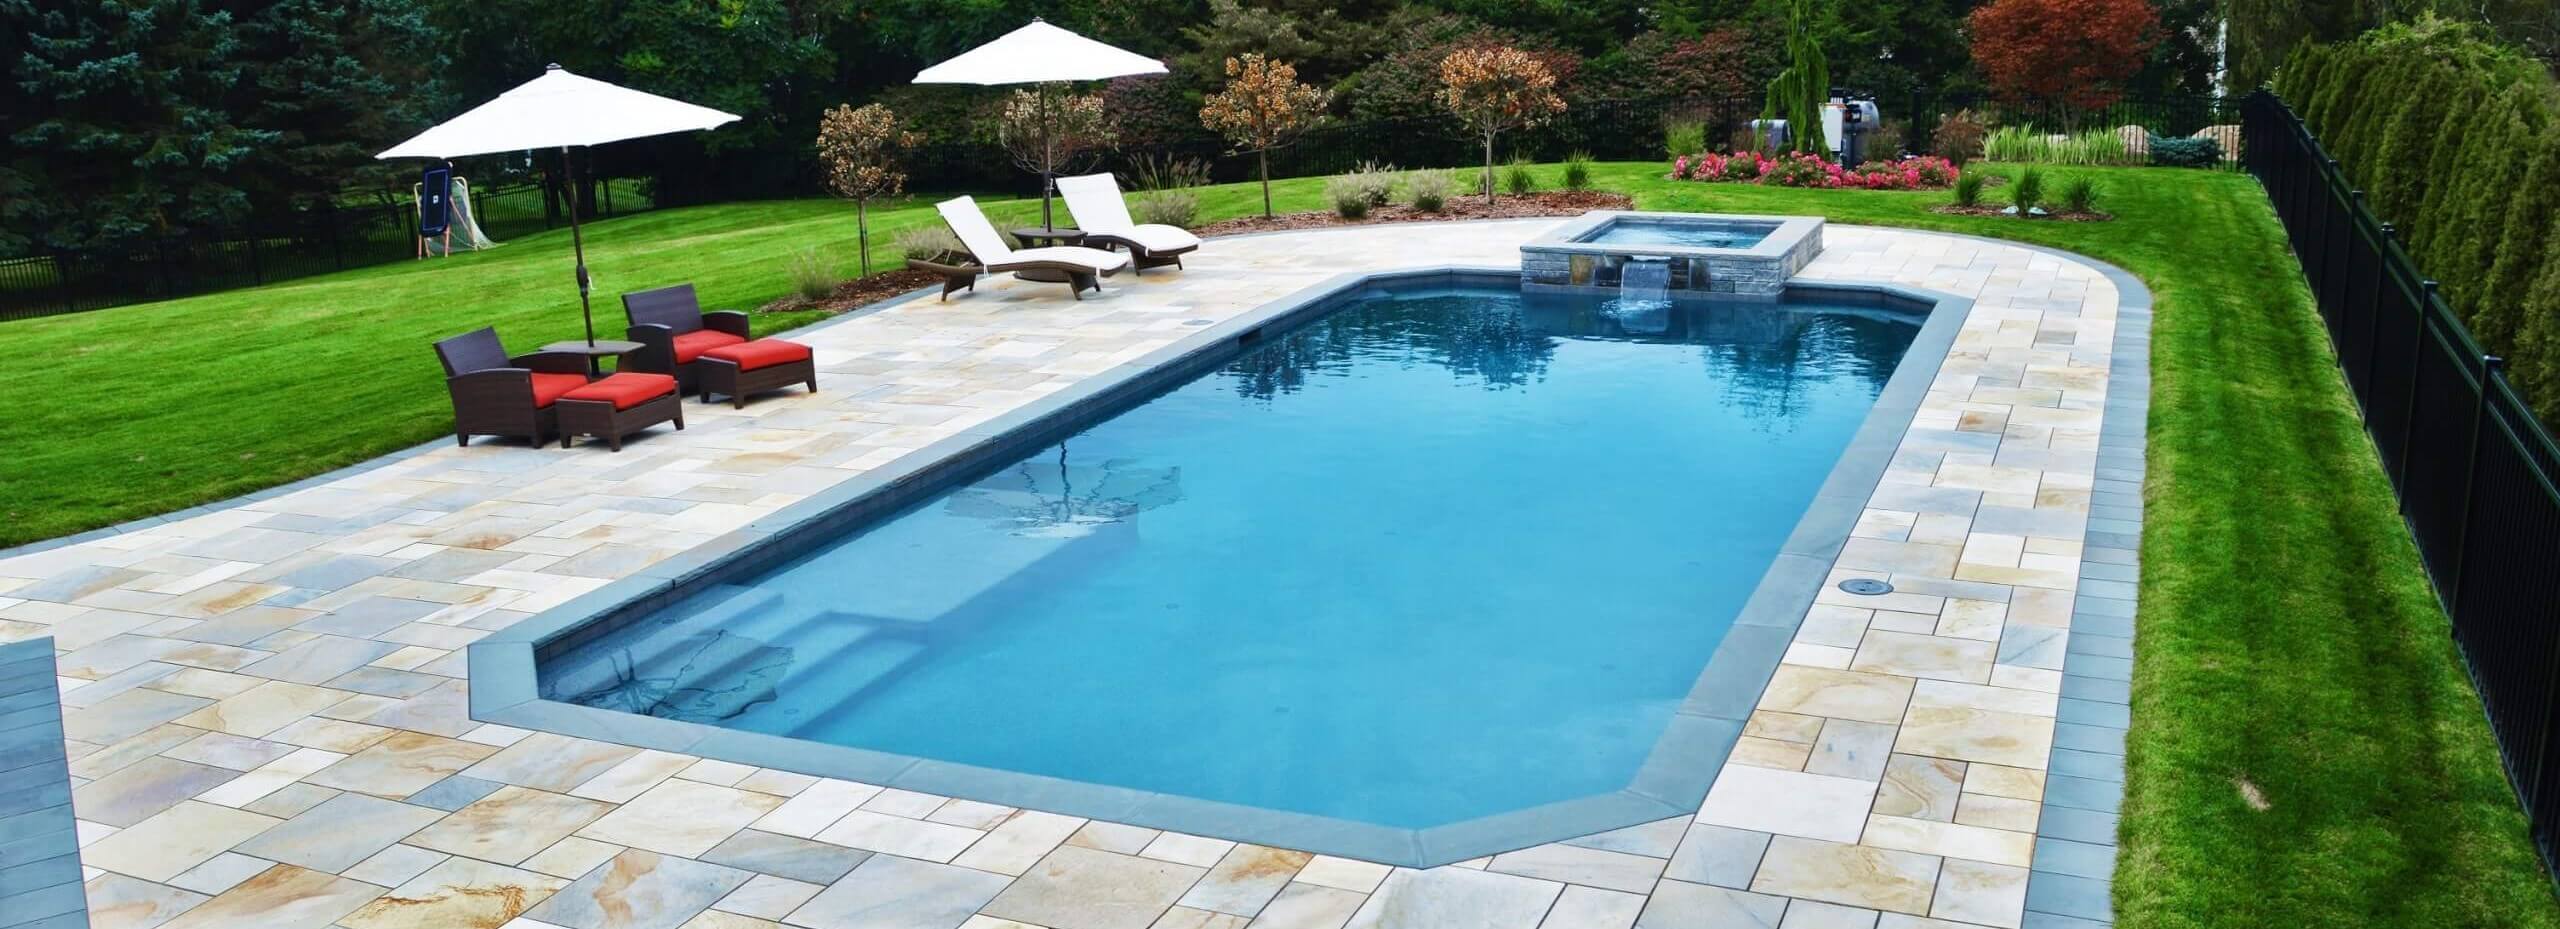 inground gunite pool with patio